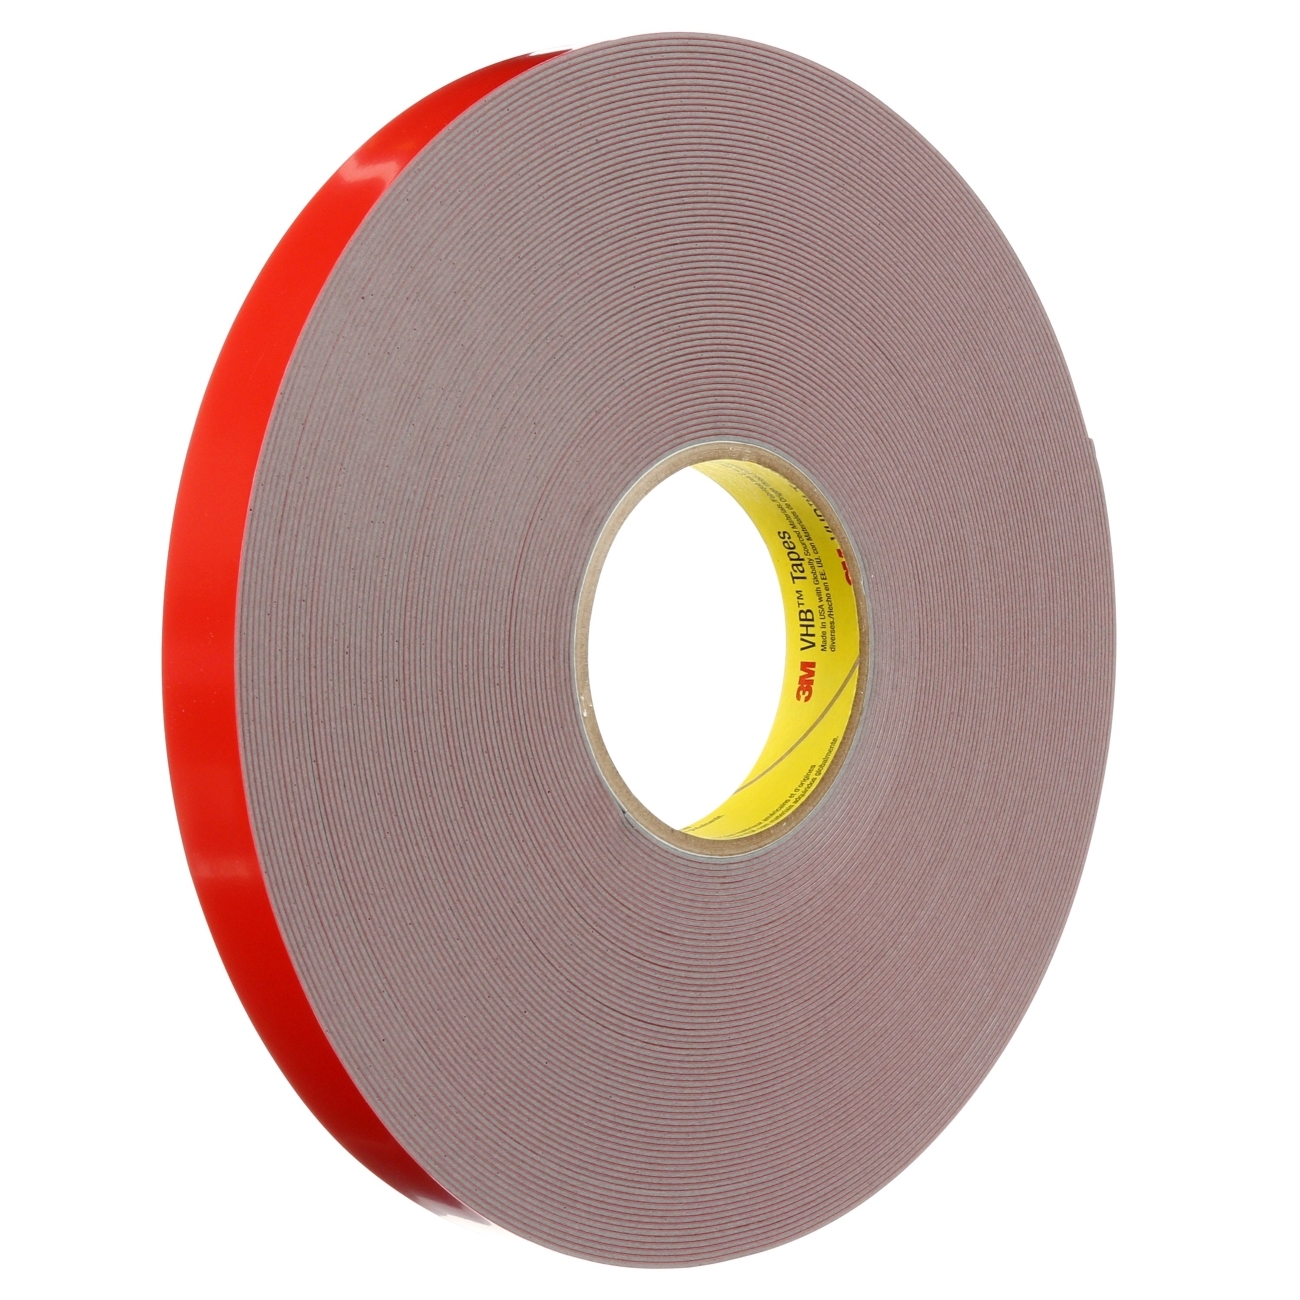 3M VHB adhesive tape 4991F, gray, 19 mm x 16.5 m, 2.3 mm